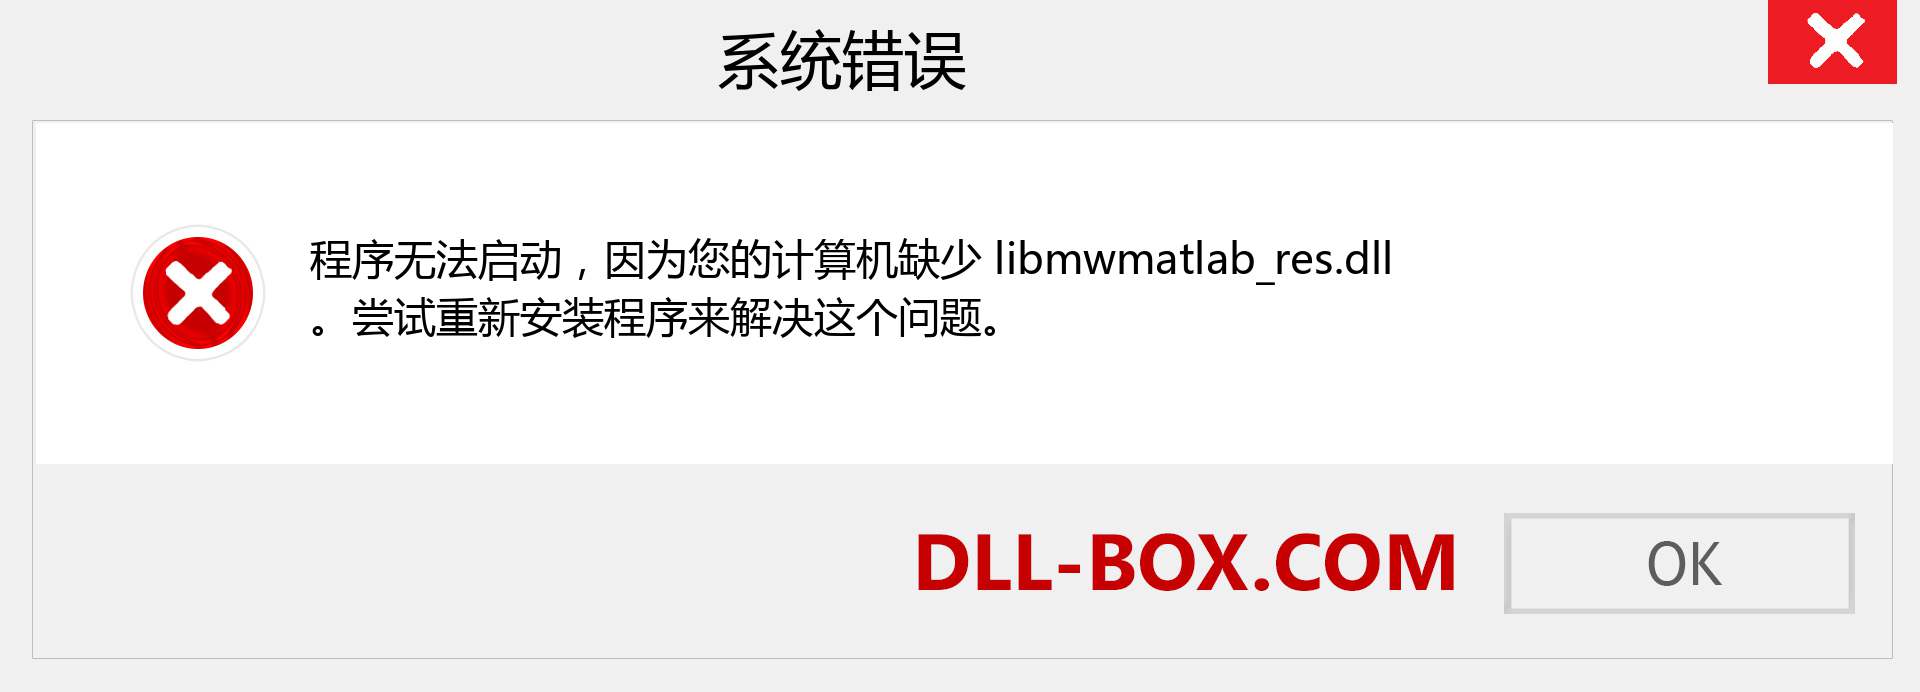 libmwmatlab_res.dll 文件丢失？。 适用于 Windows 7、8、10 的下载 - 修复 Windows、照片、图像上的 libmwmatlab_res dll 丢失错误